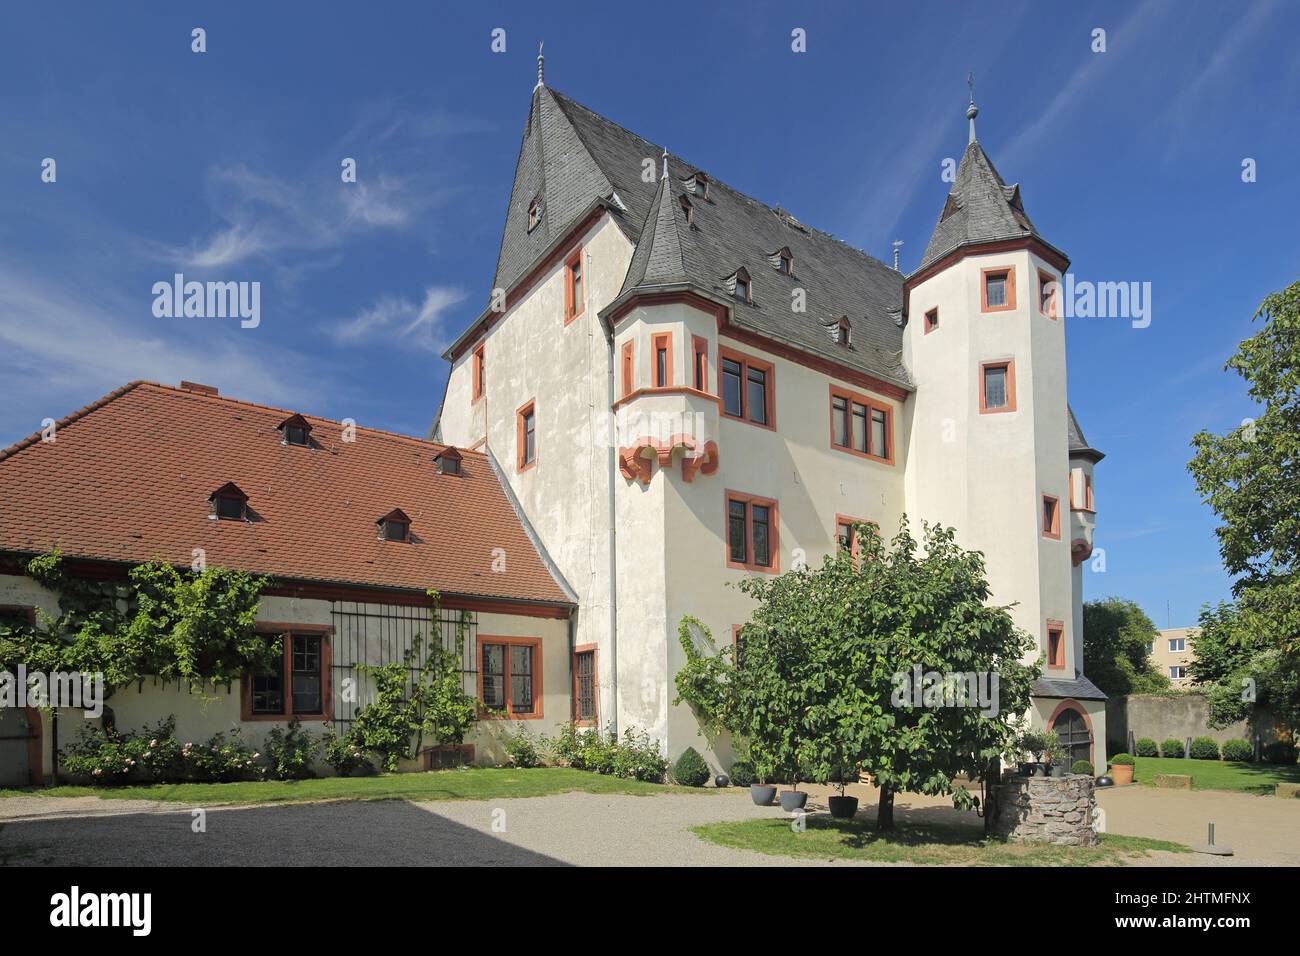 Geisenheim rheingau hi-res stock photography and images - Alamy